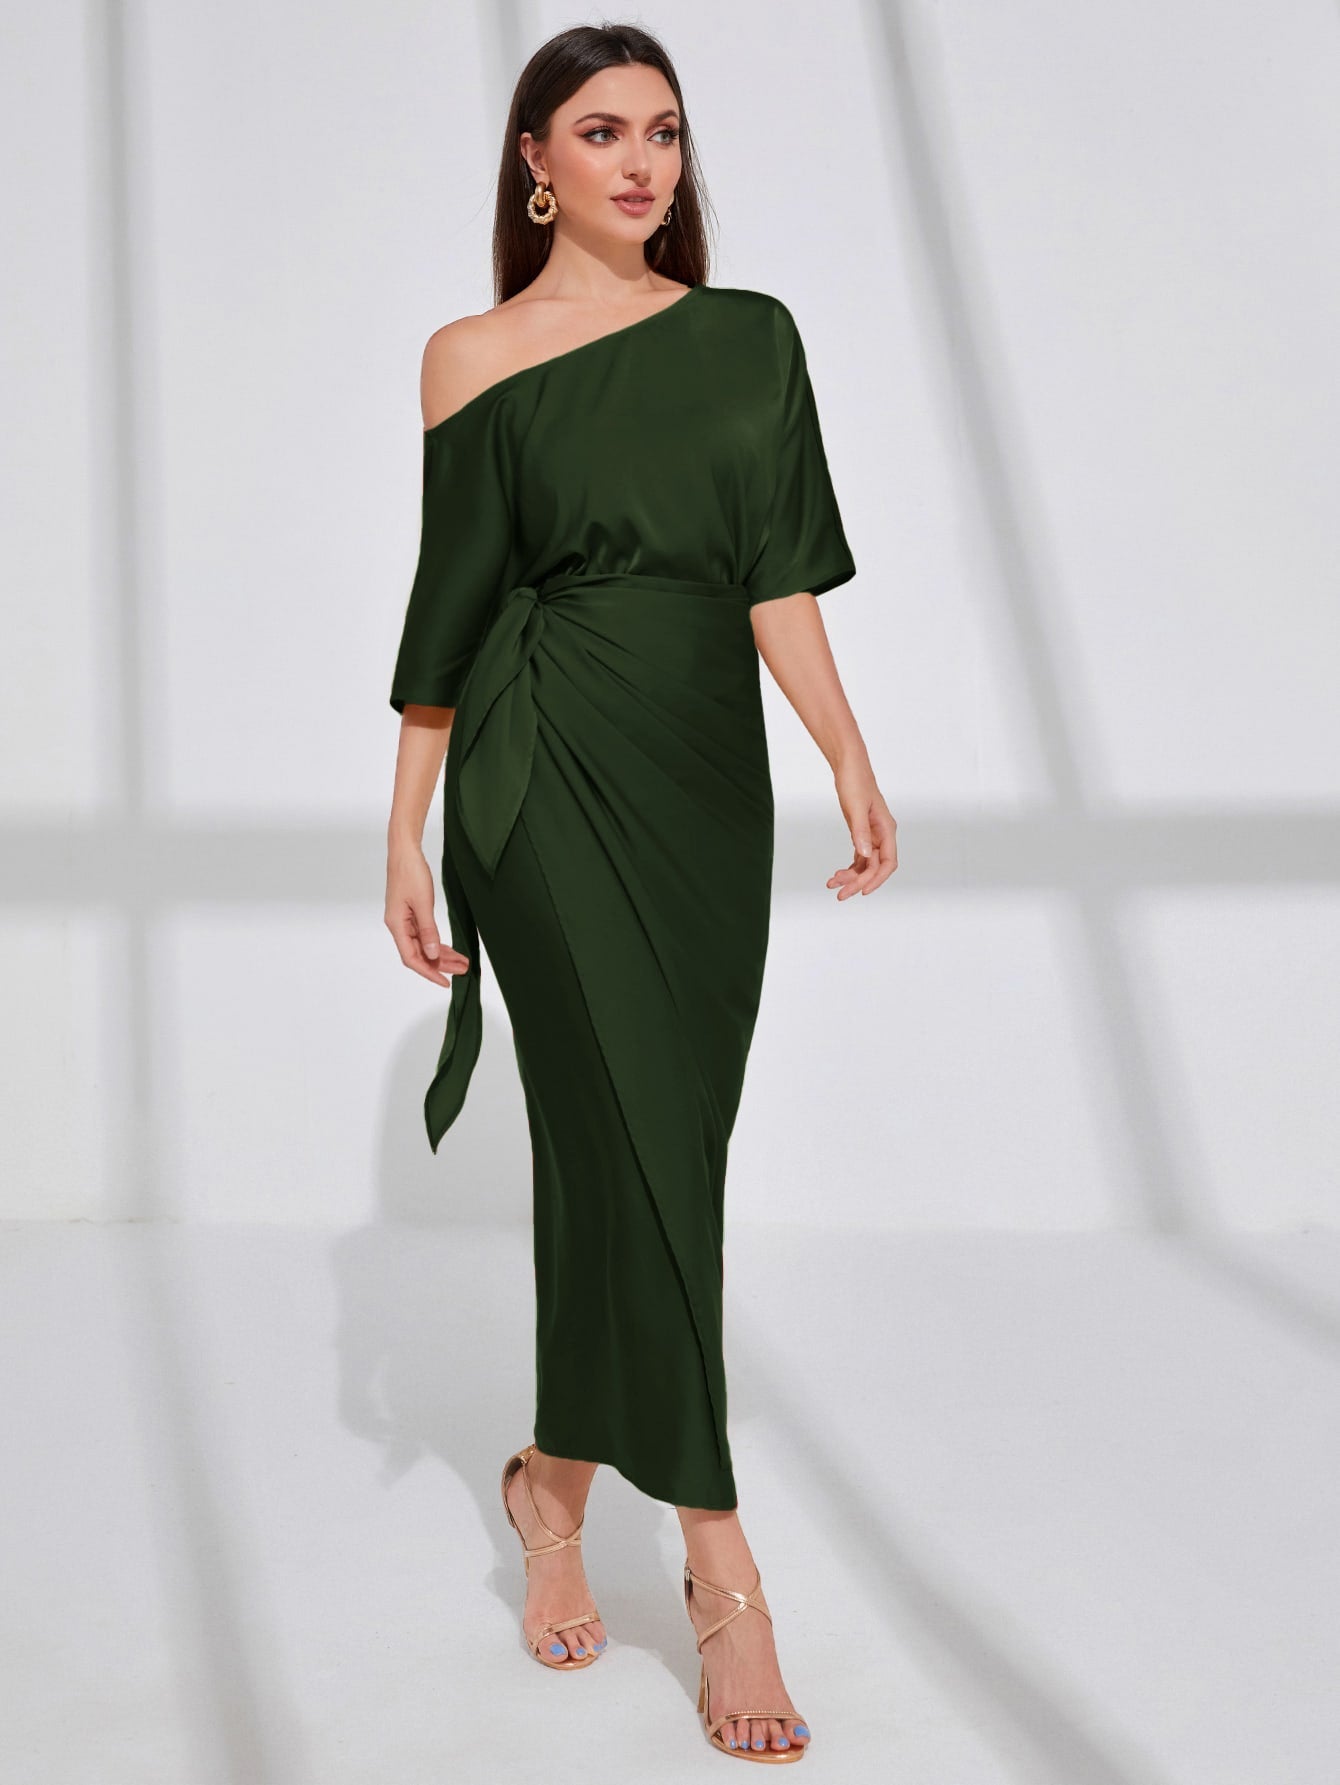 Dark green Asymmetrical Satin Evening Dress - Ready to ship